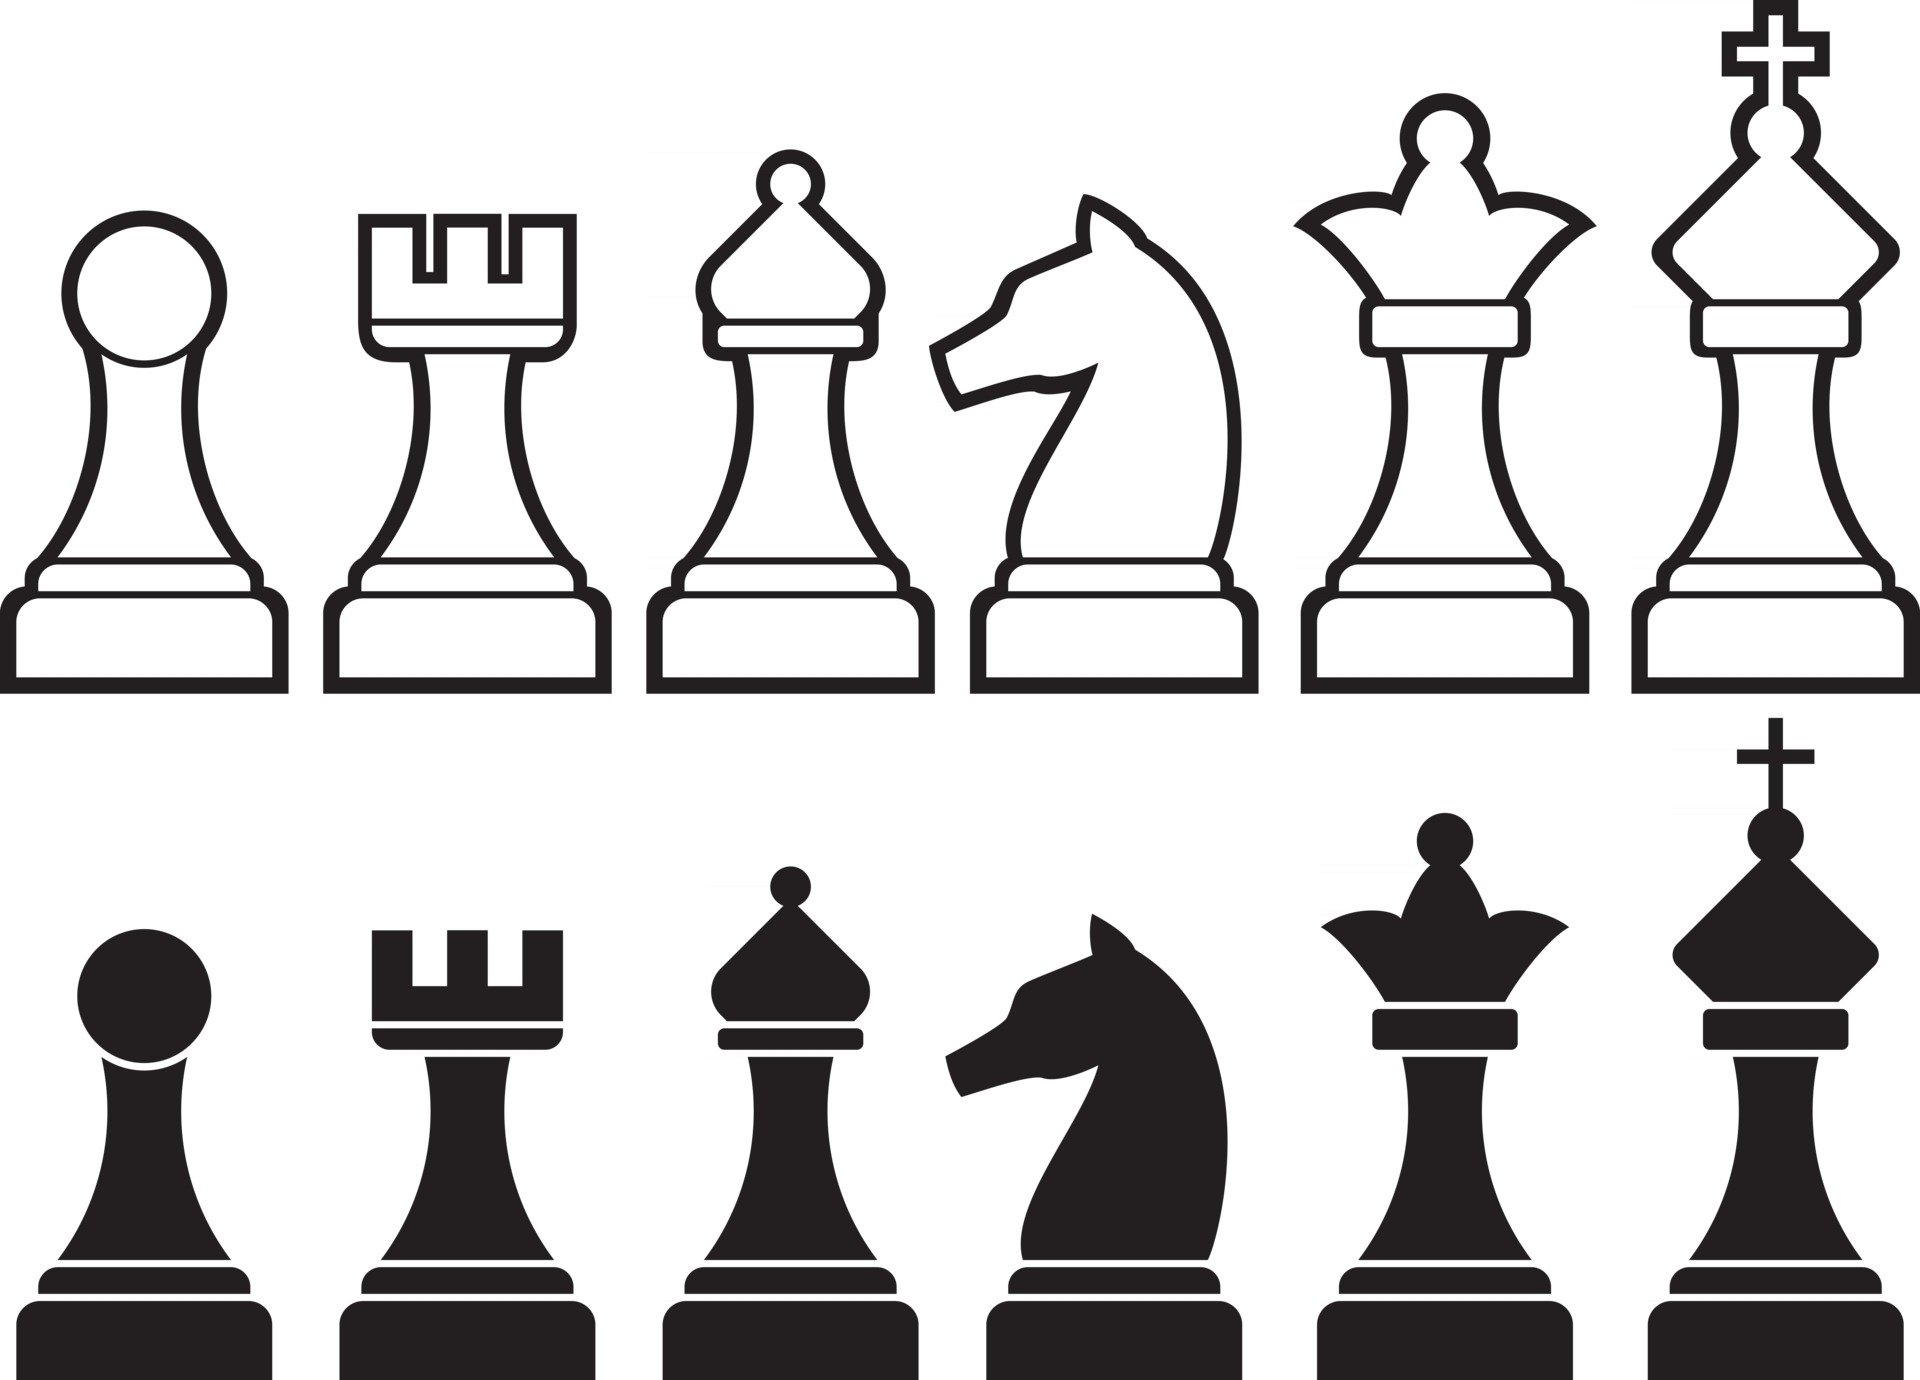 Шахматные фигуры на шахматной доске